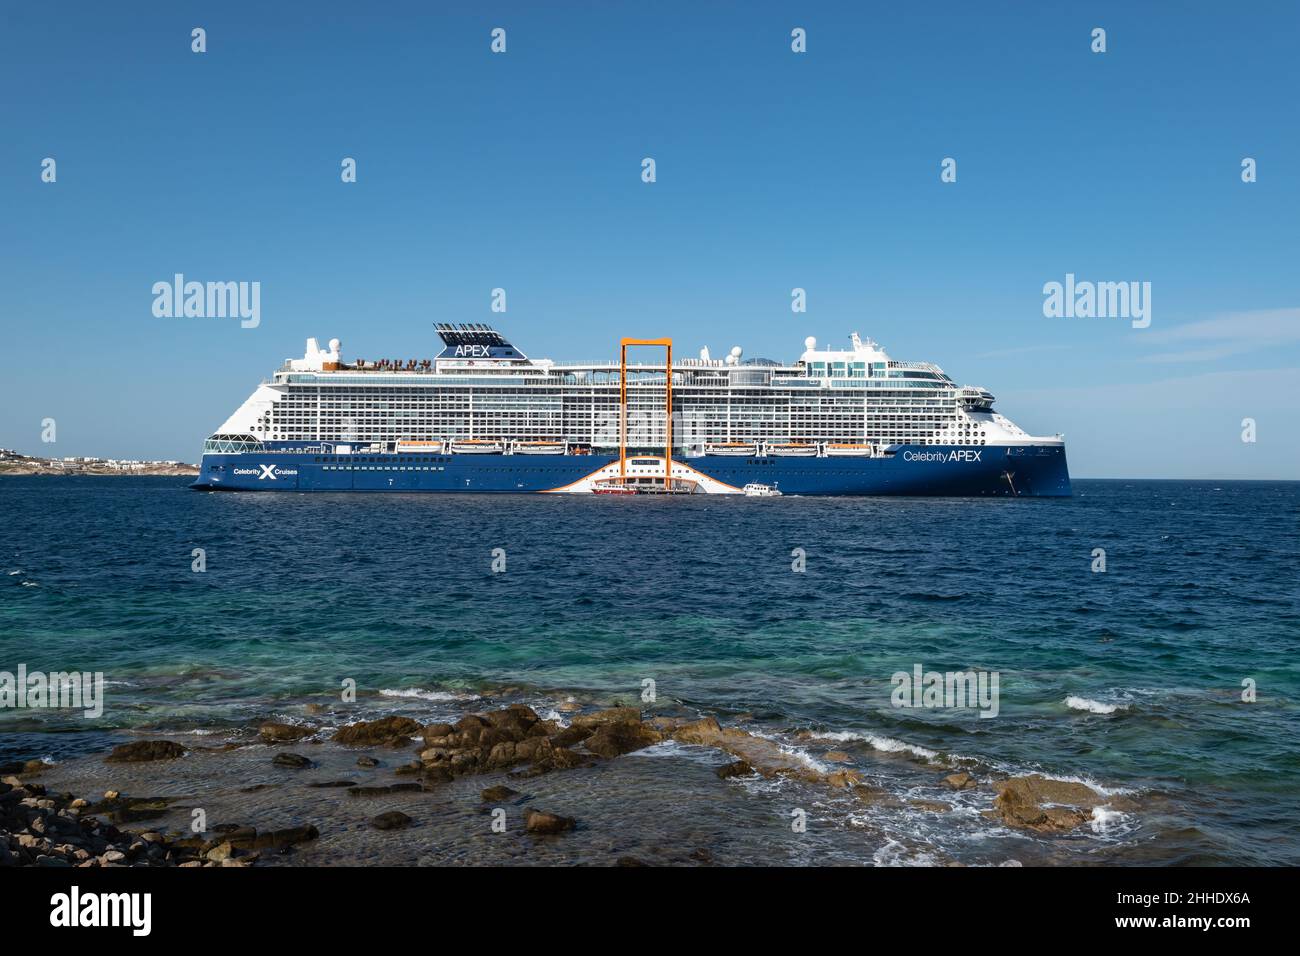 MYKONOS, GREECE - SEPTEMBER 21, 2021: Cruise ship Apex Celebrity Cruises anchored in harbor bay of Mykonos Island, Greece. Stock Photo